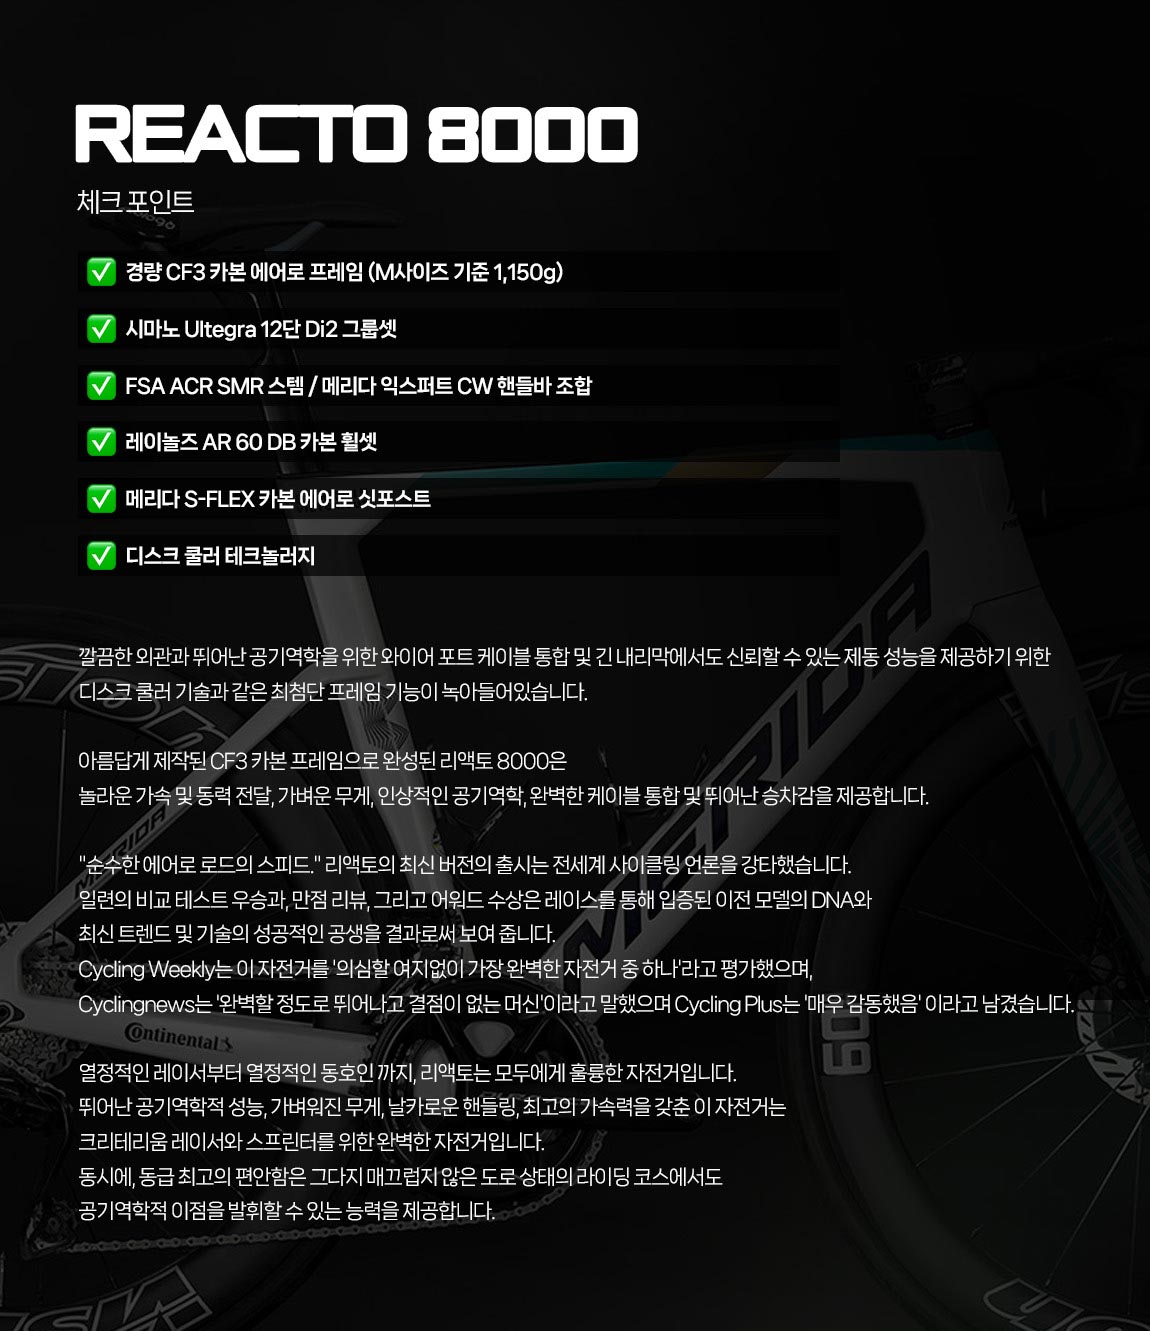 05_reacto8000_checkpoint_1_013506.jpg